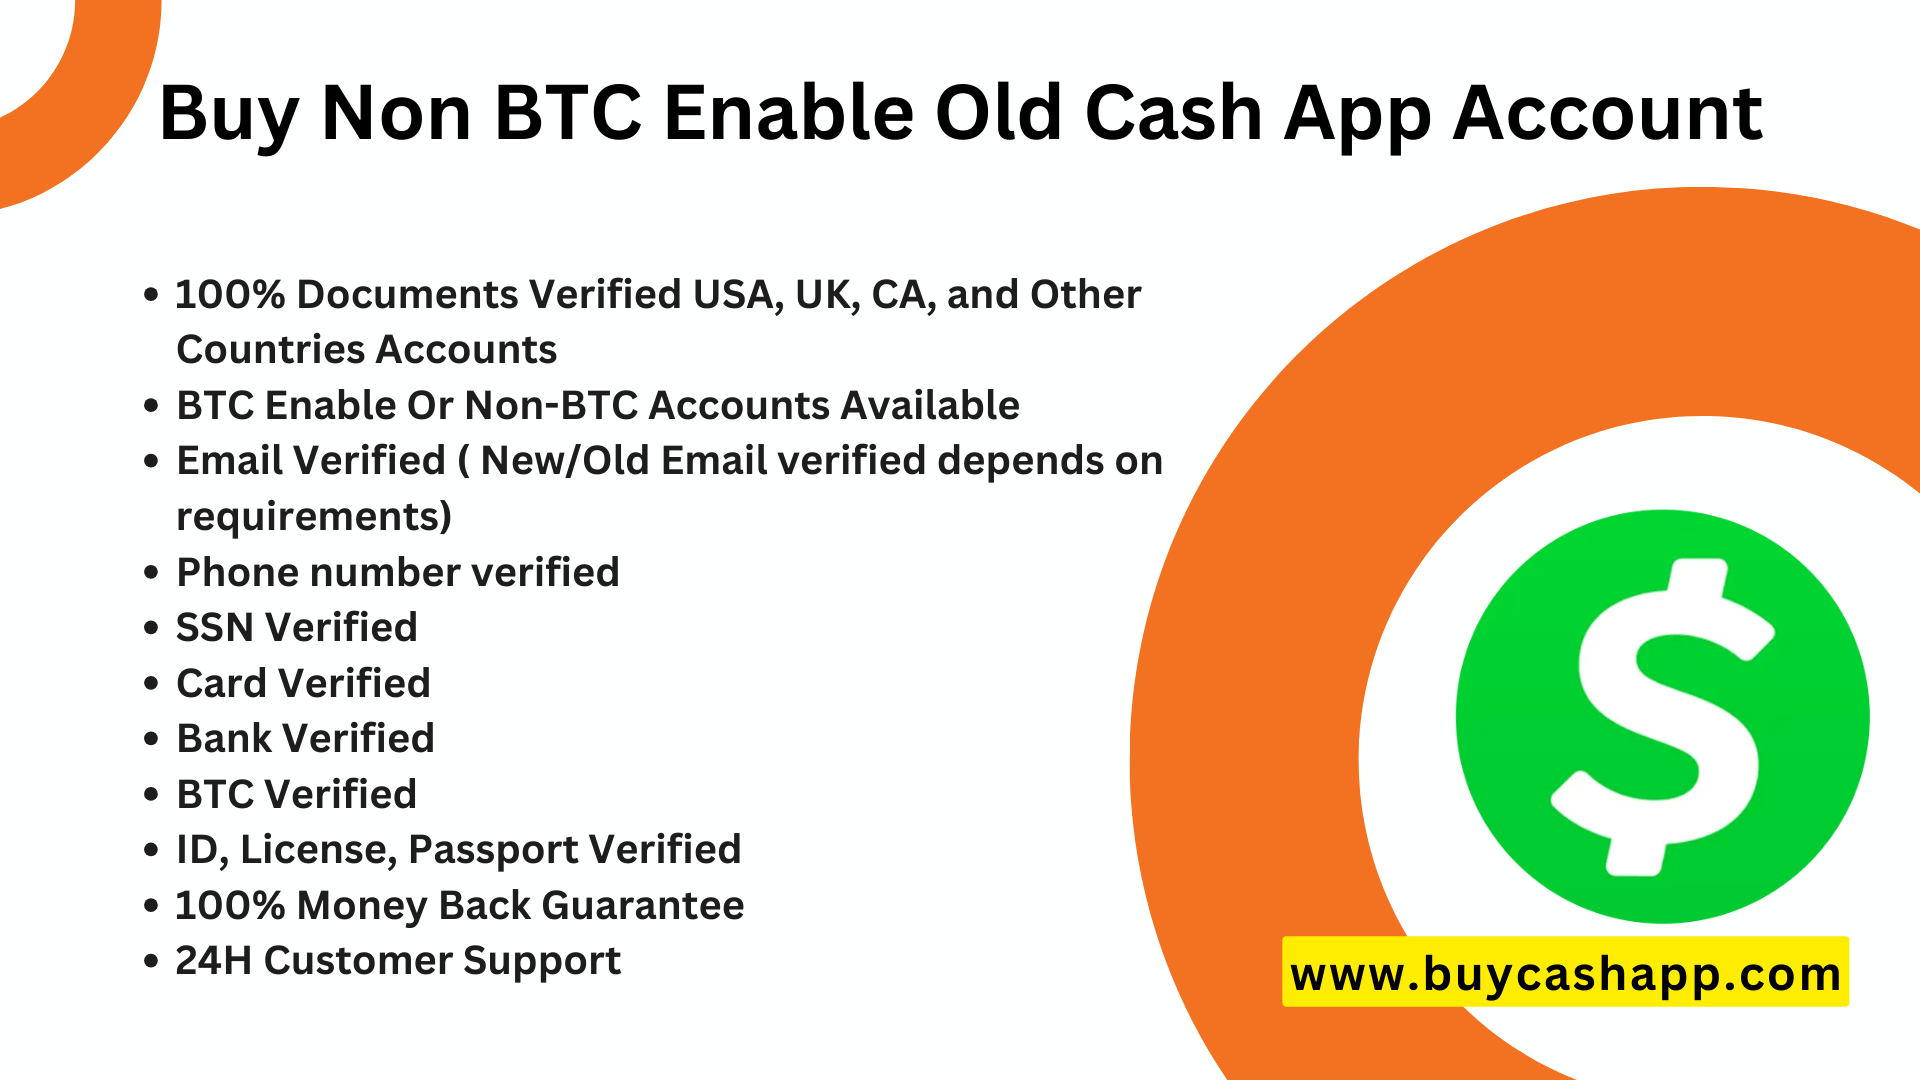 Buy Non BTC Enable Old Cash App Account